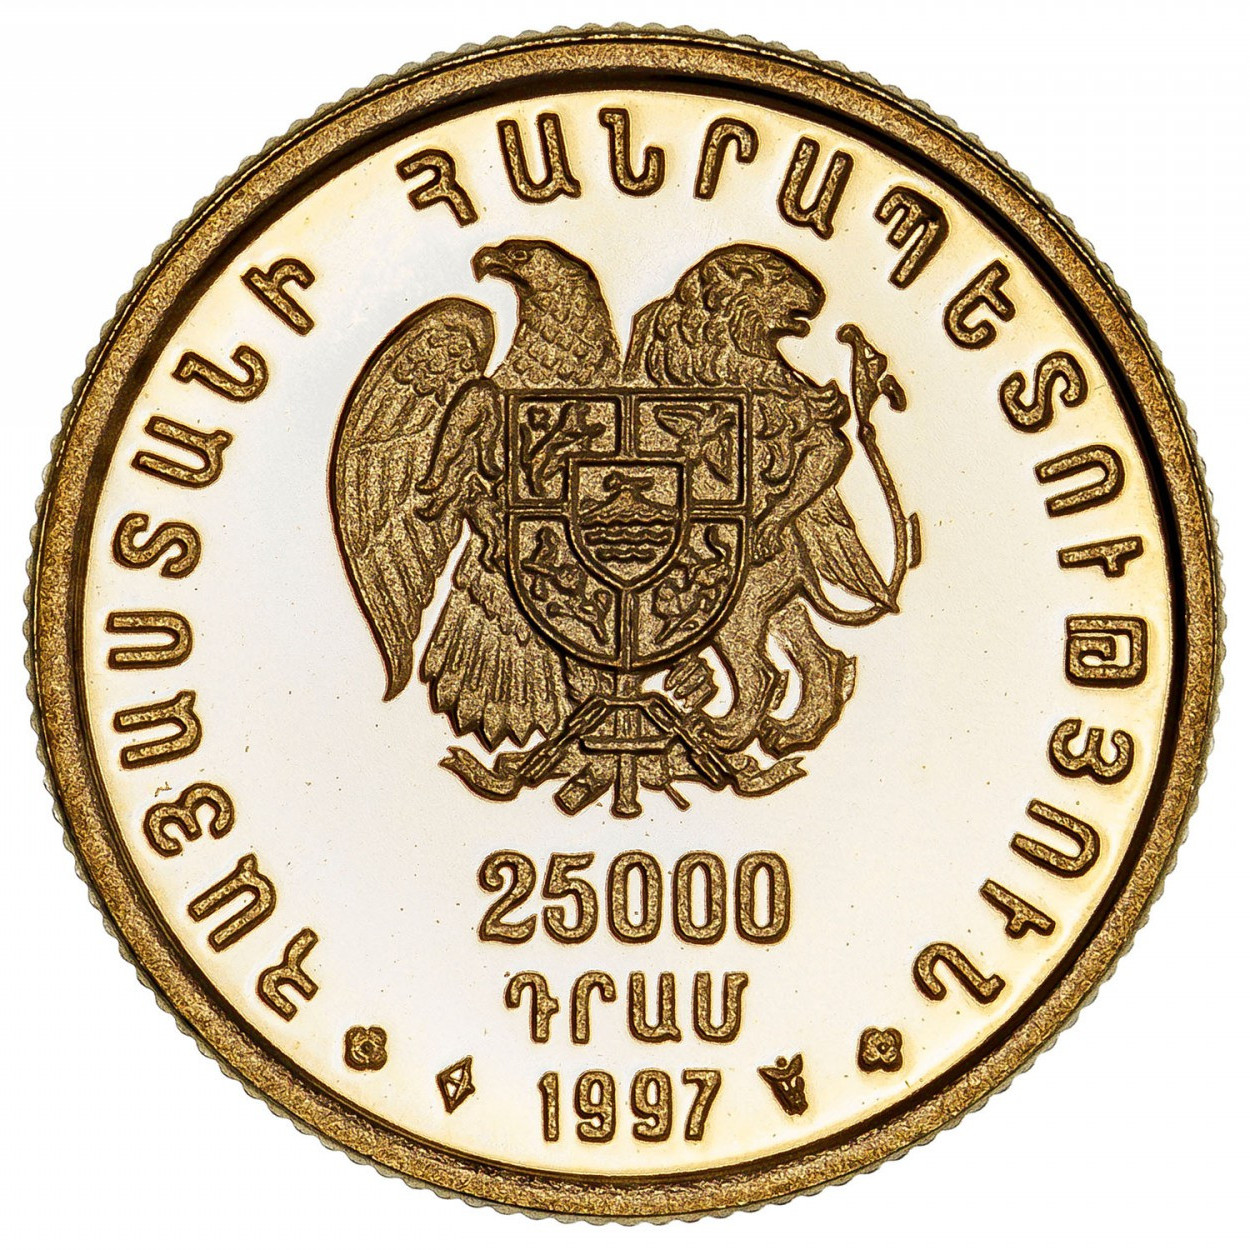 Arménie - 25000 Dram - 1997 revers